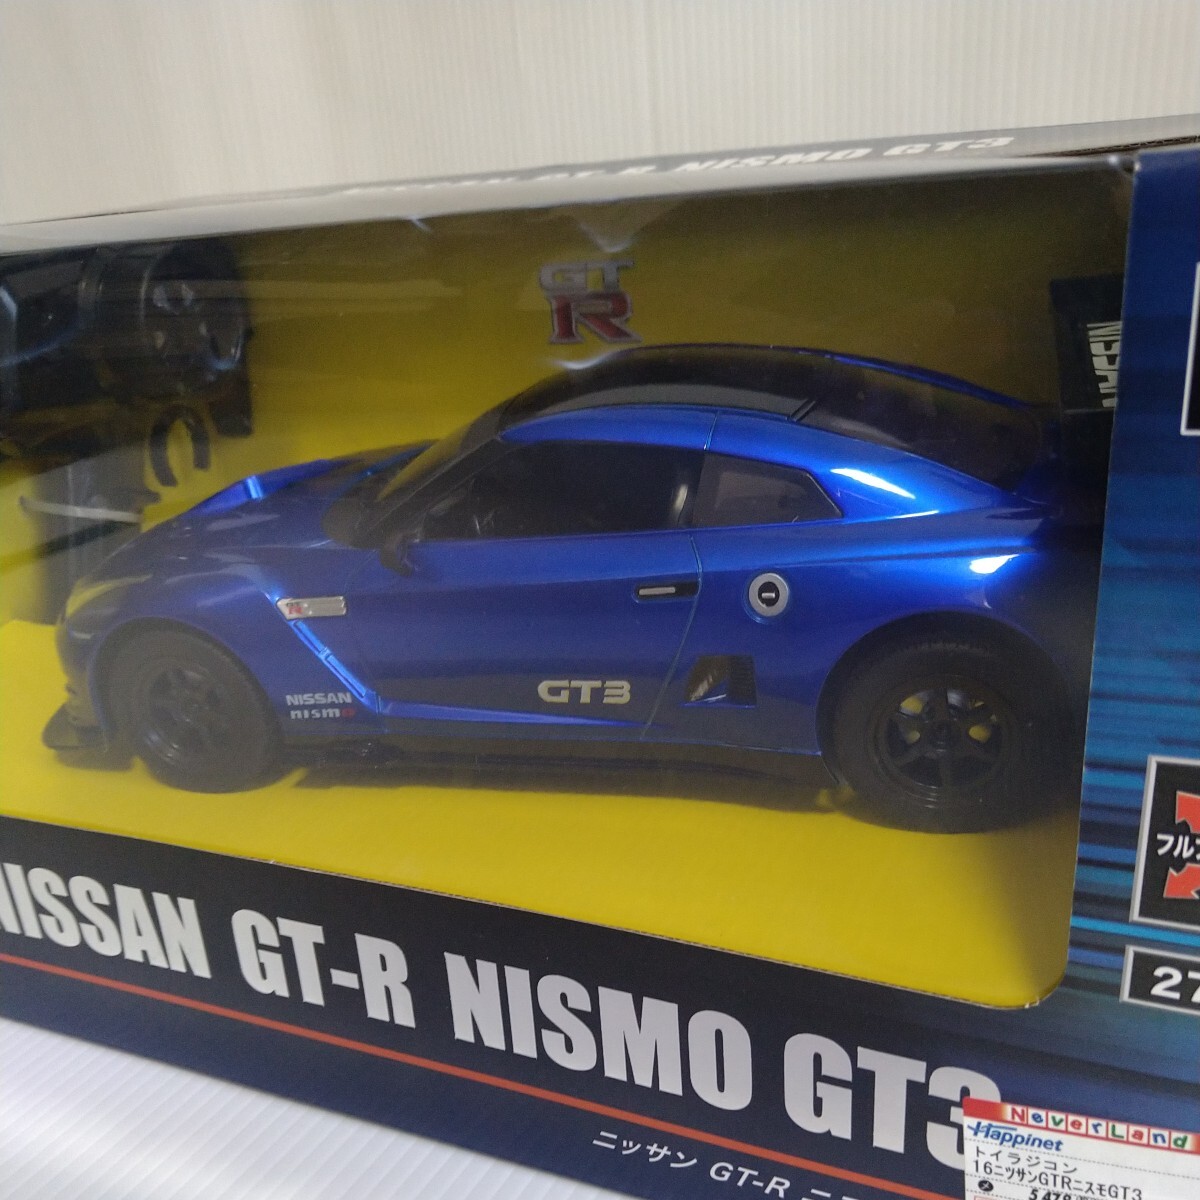  игрушка радиоконтроллер 16 Ниссан GTR Nismo GT3 не использовался 